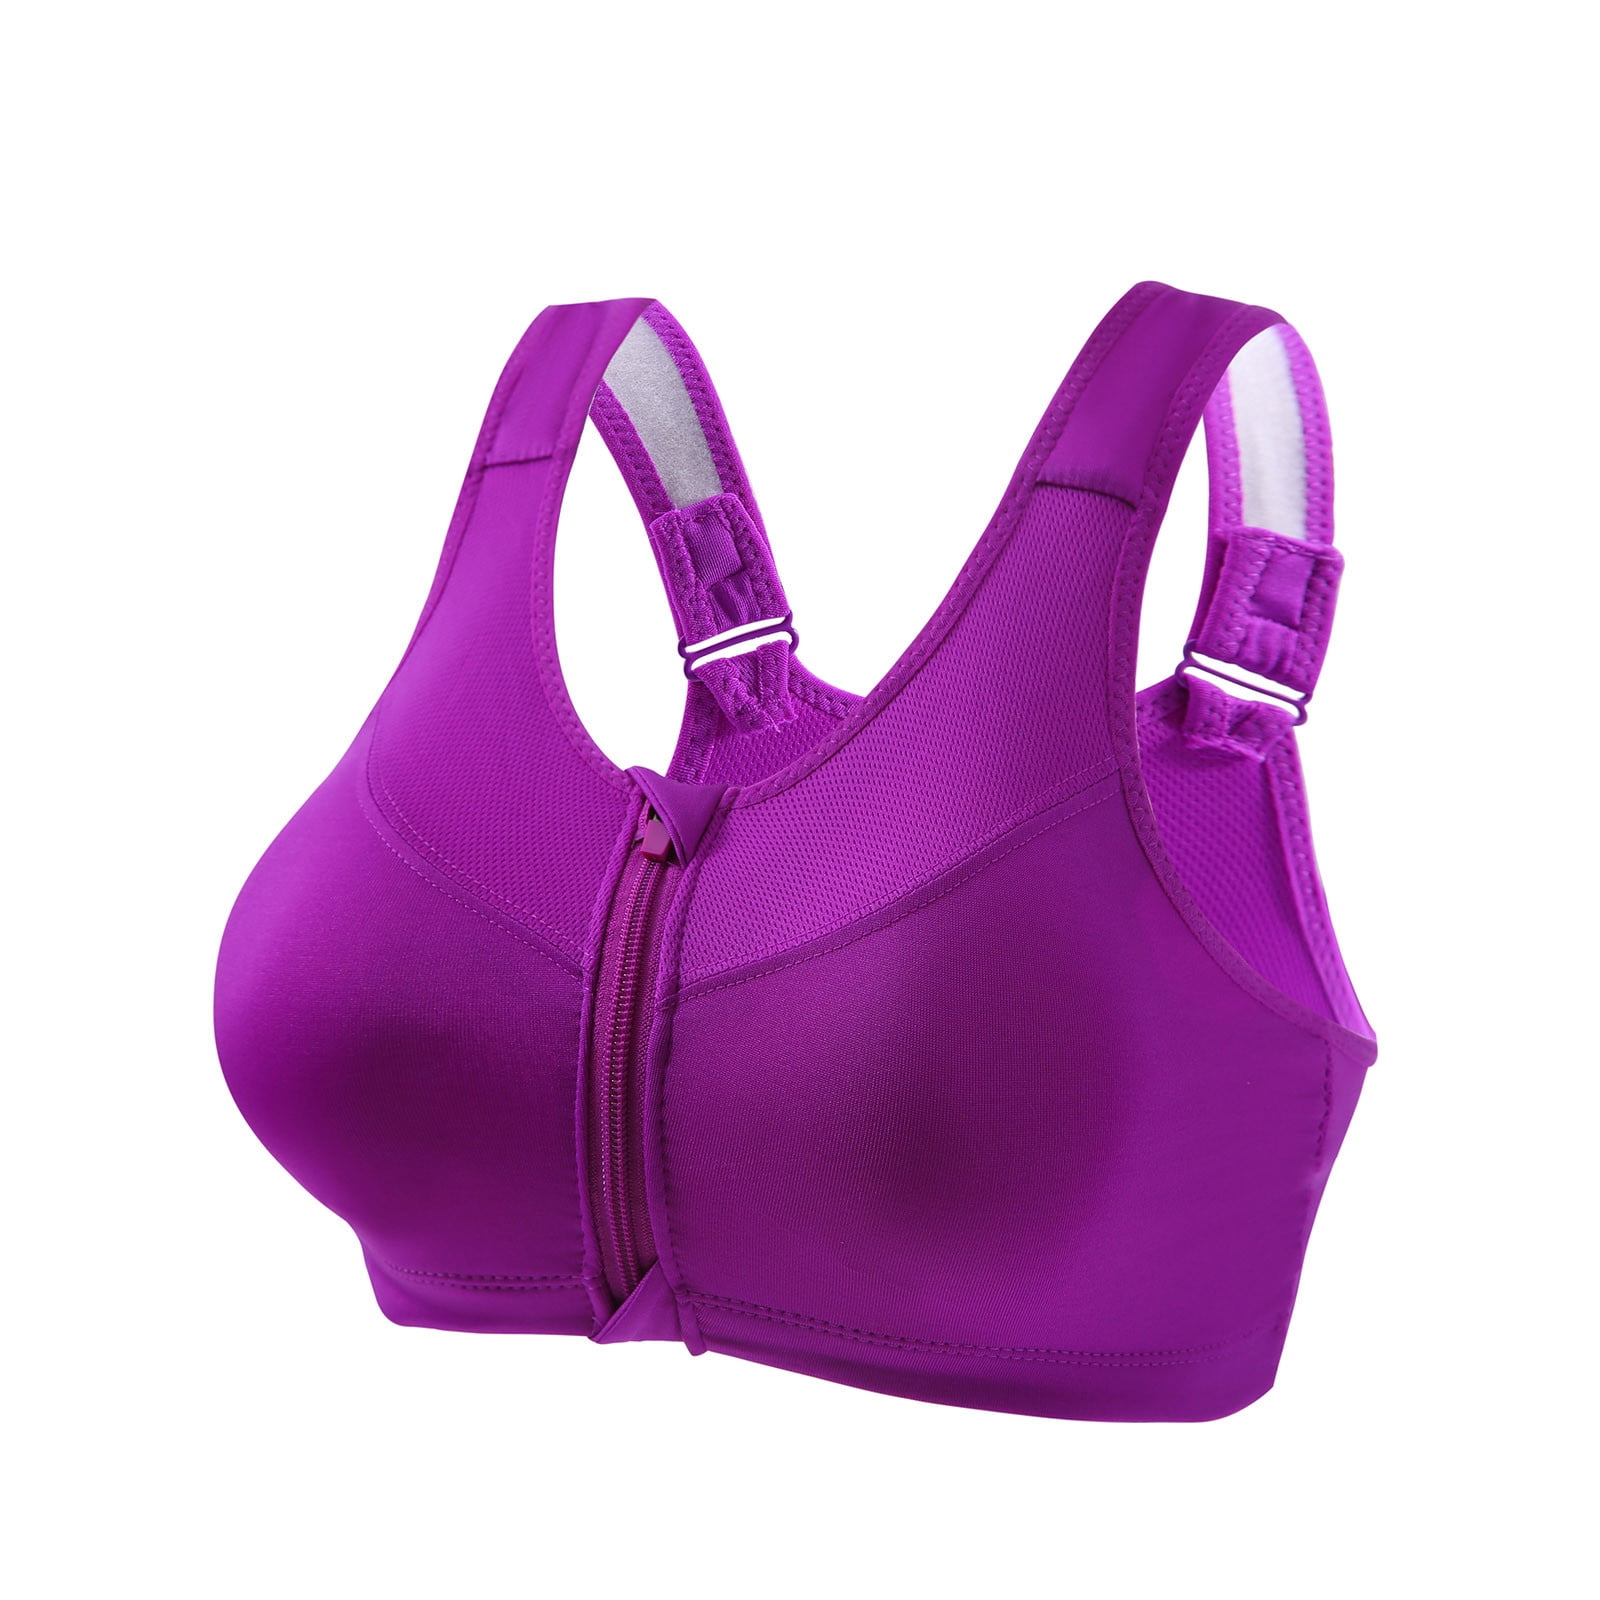 Bigersell Women's+sports+bras Sale Clearance Full Support Bras